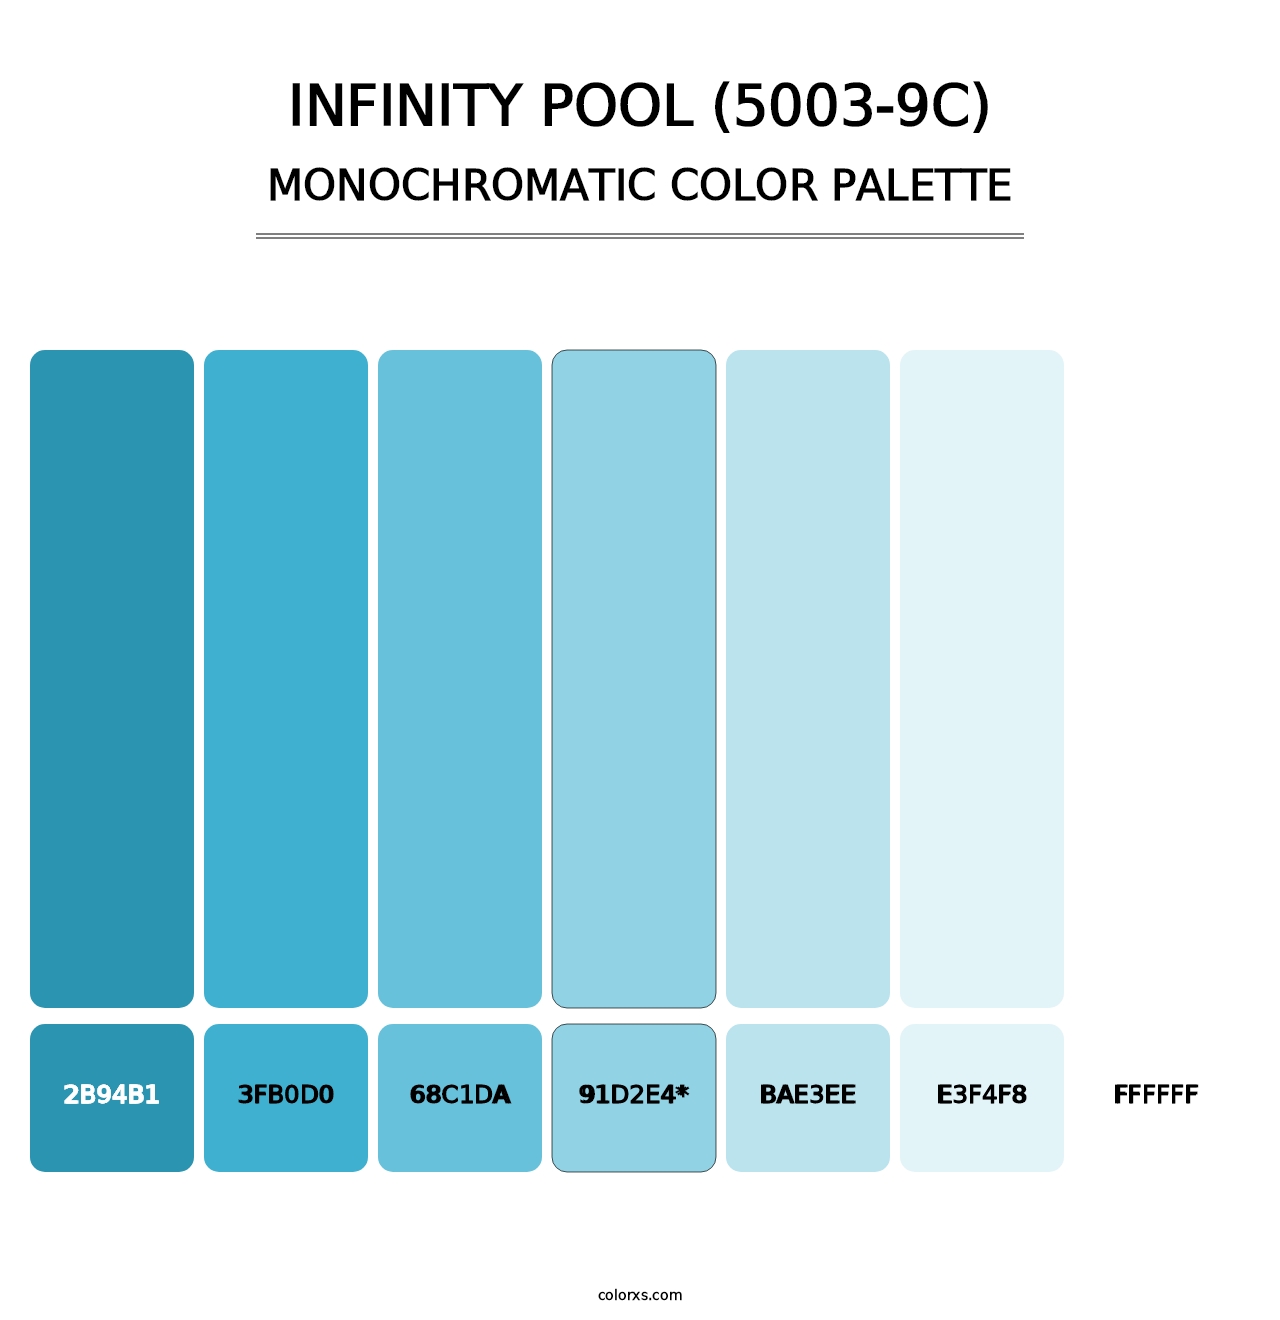 Infinity Pool (5003-9C) - Monochromatic Color Palette